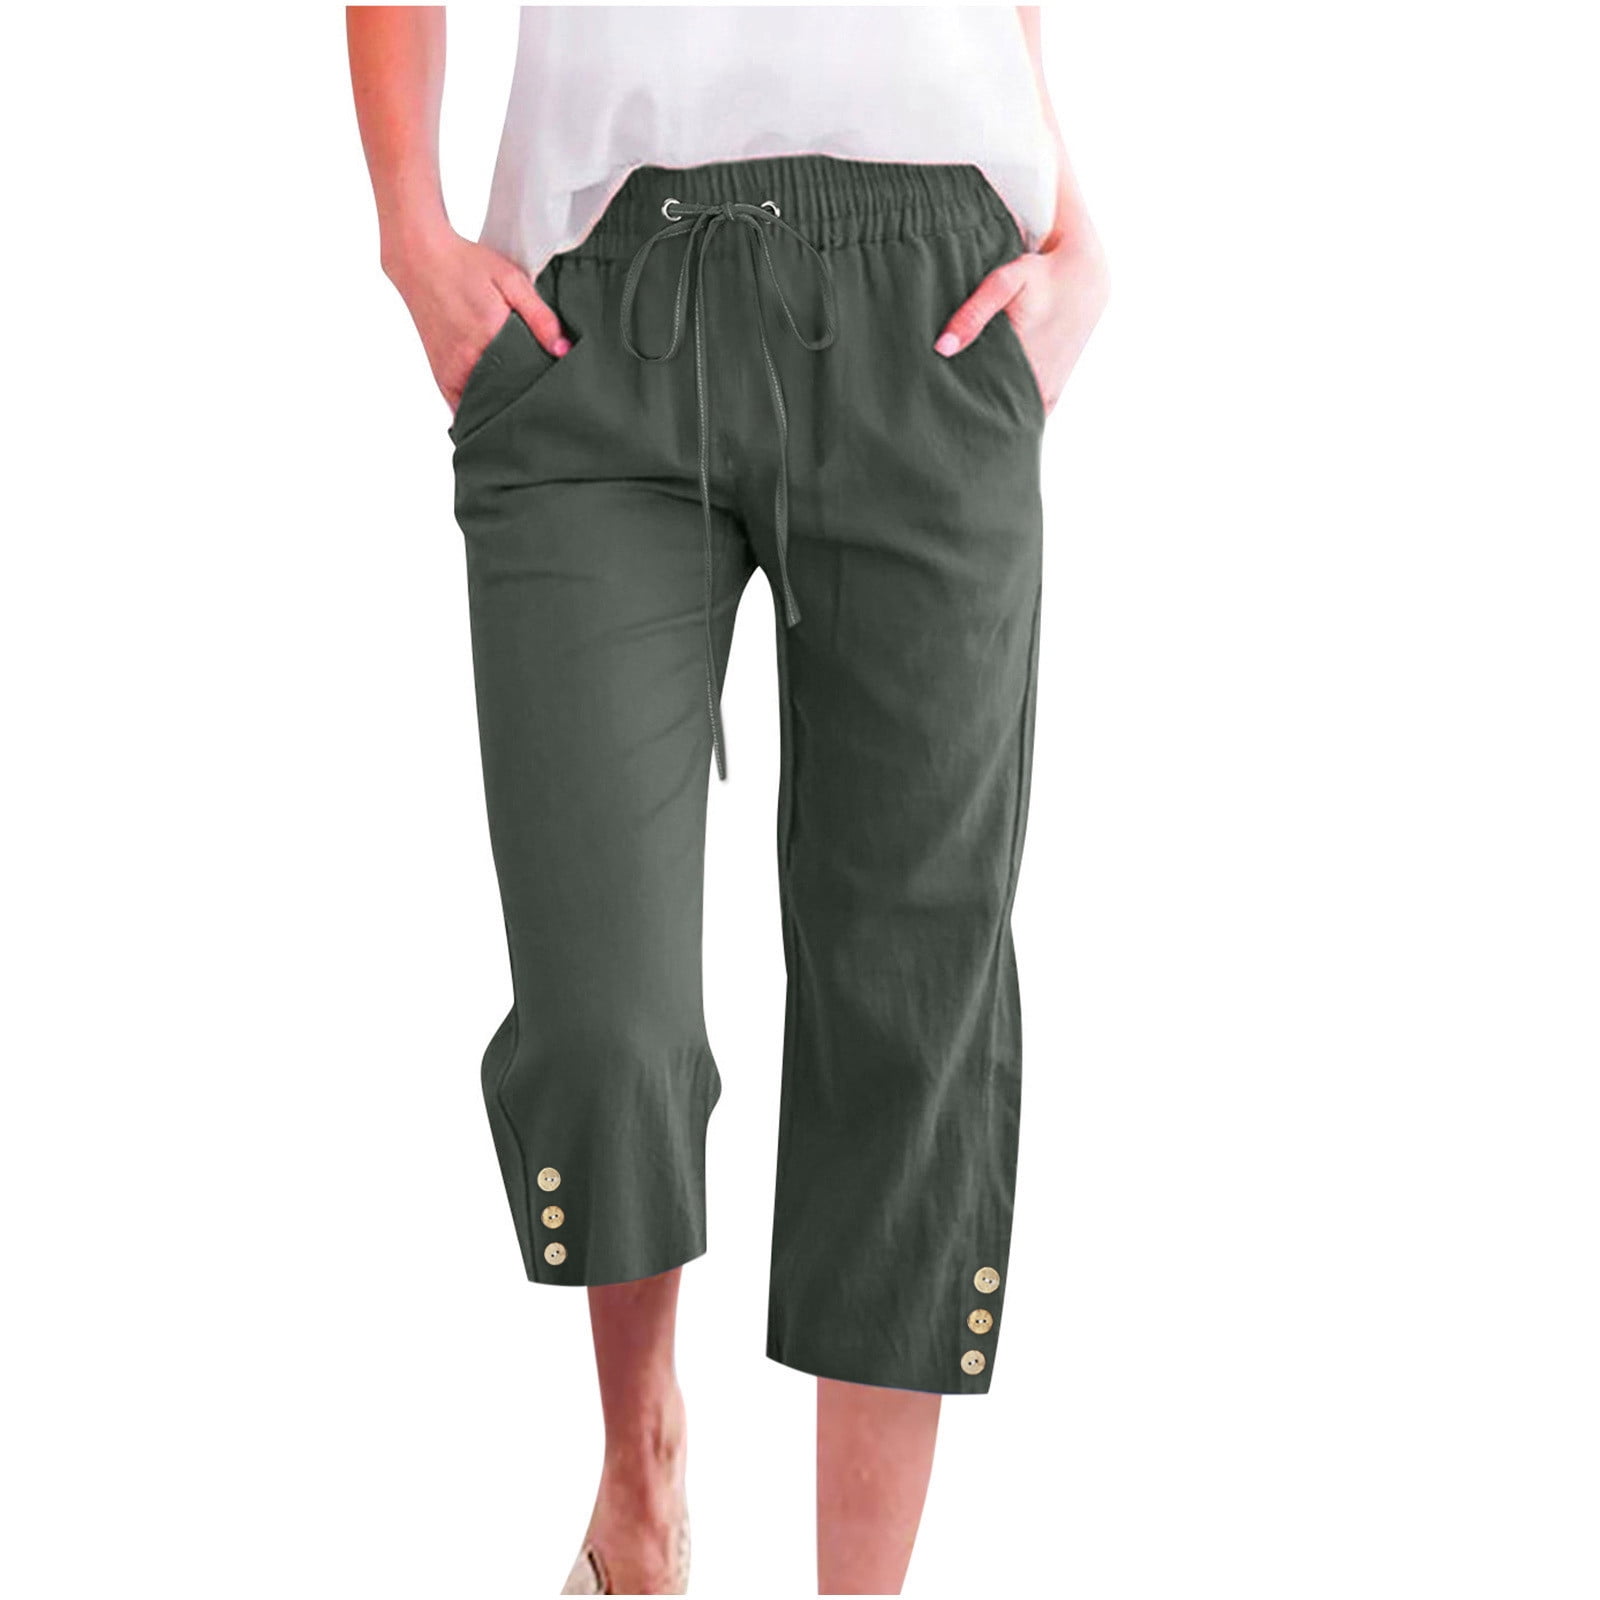 QUYUON Capris Pants for Women Casual Summer Buttons Crop Pants ...